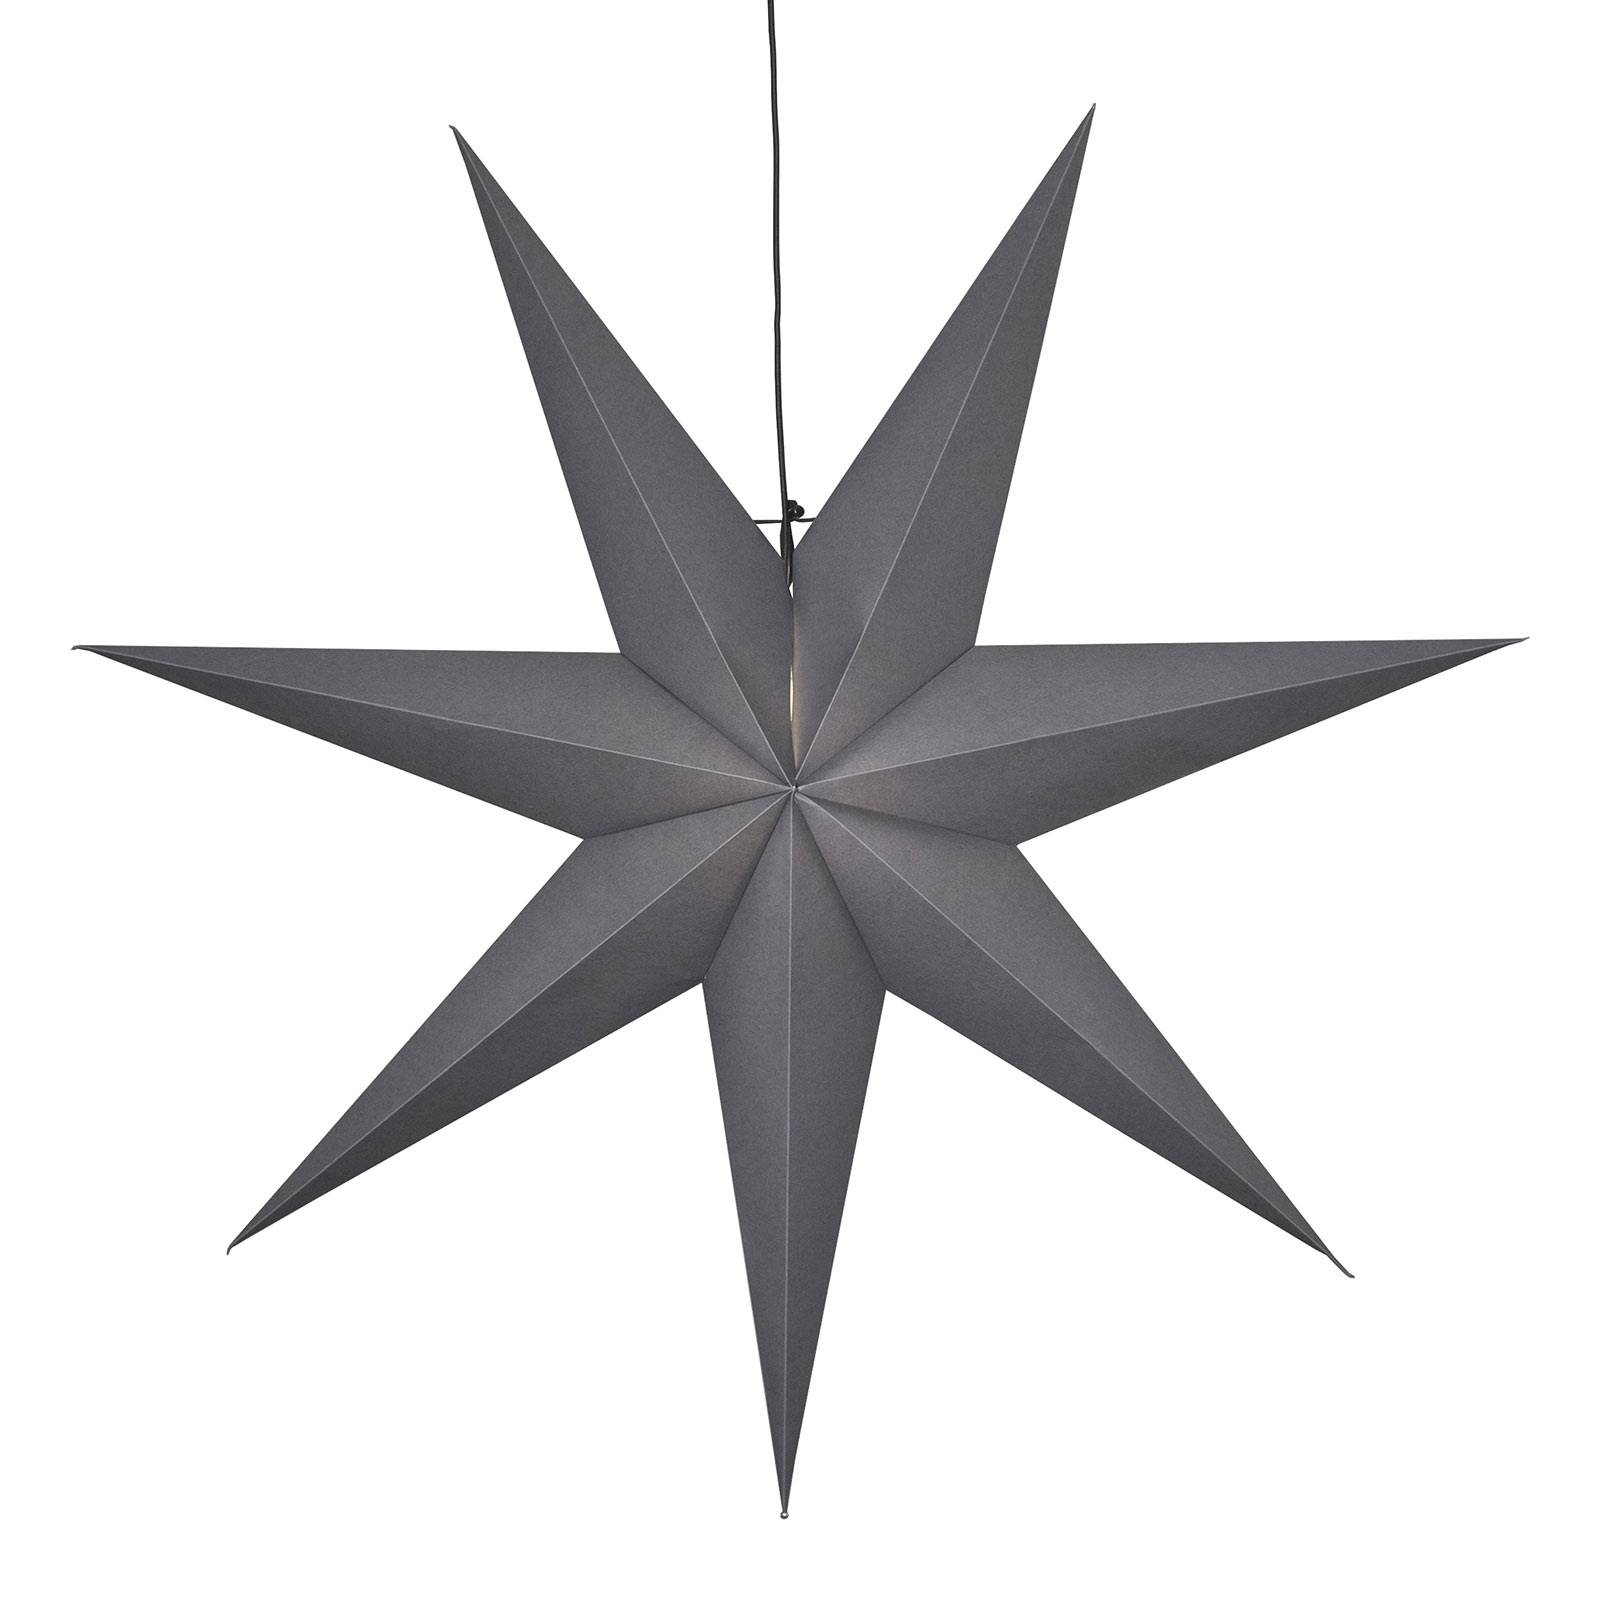  Star Trading Star Trading Estrella De Papel Ozen 7 Puntas ø 100 Cm 